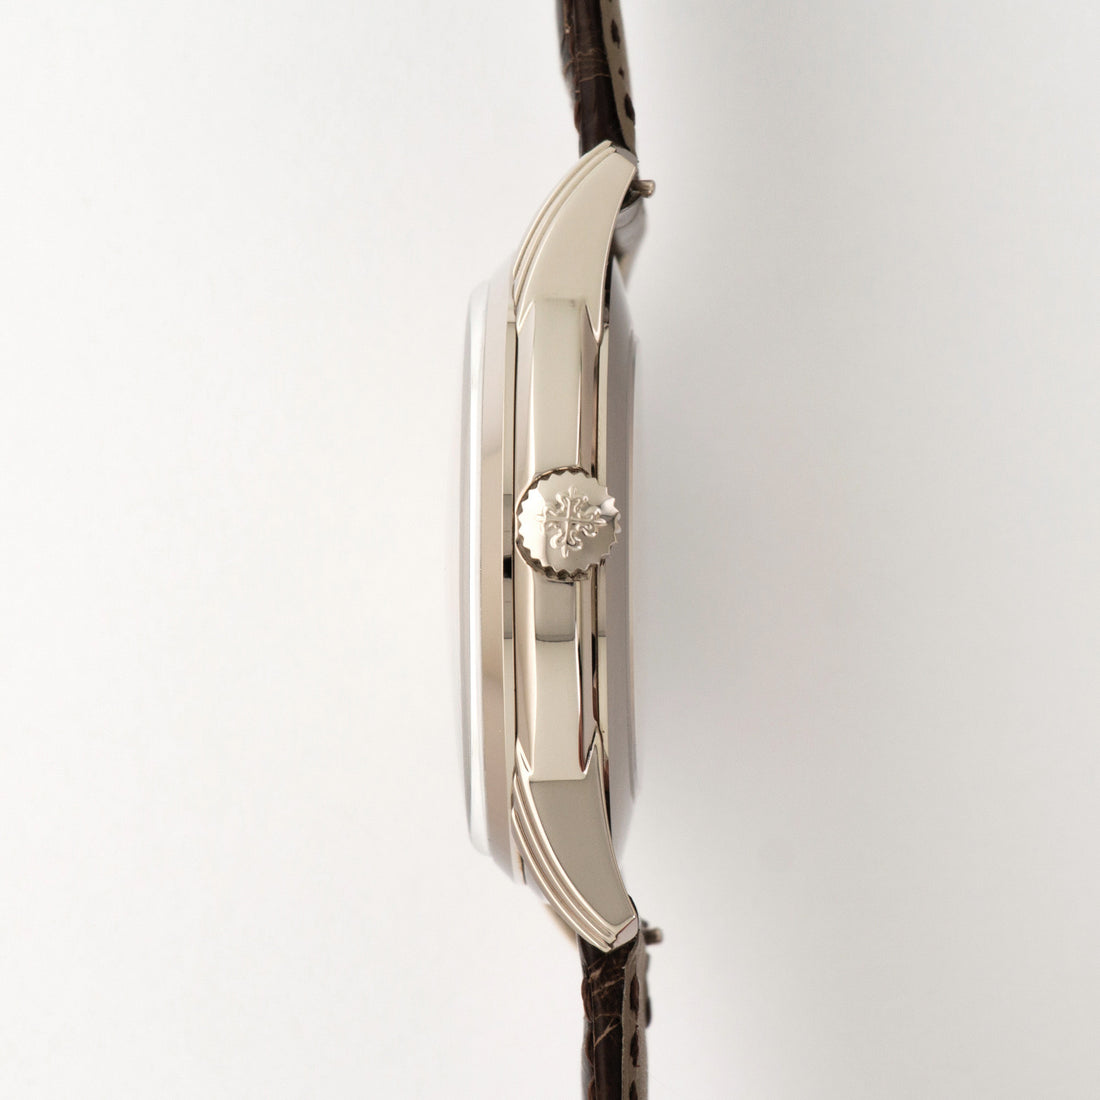 Patek Philippe Perpetual Calendar 5320G-001 18k WG – The Keystone Watches